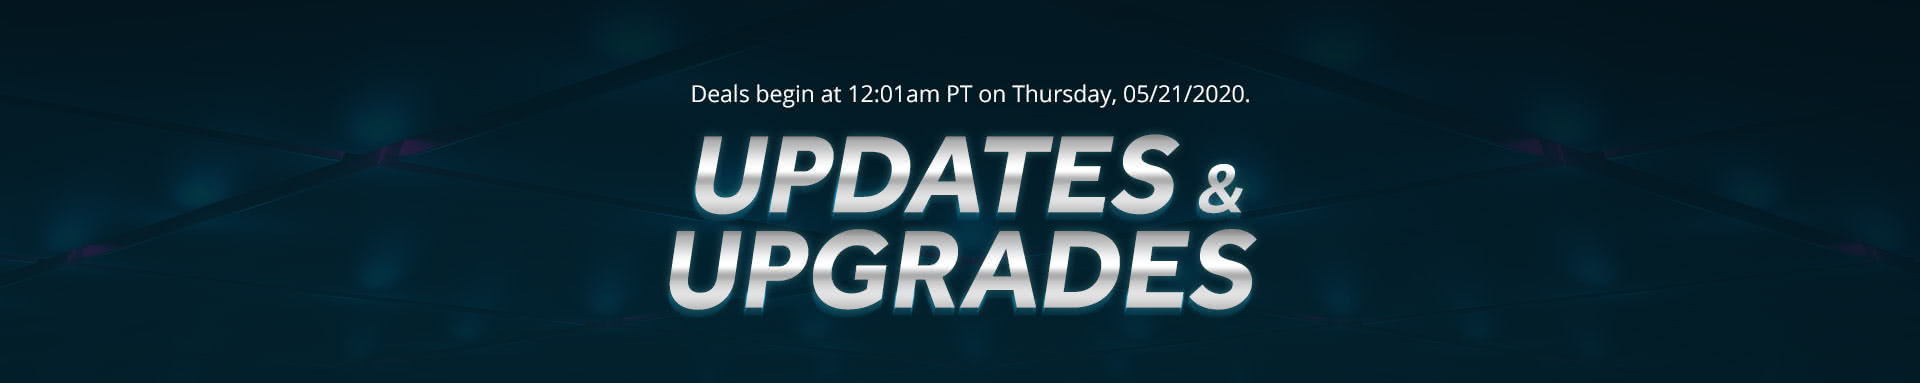 Updates & Upgrades